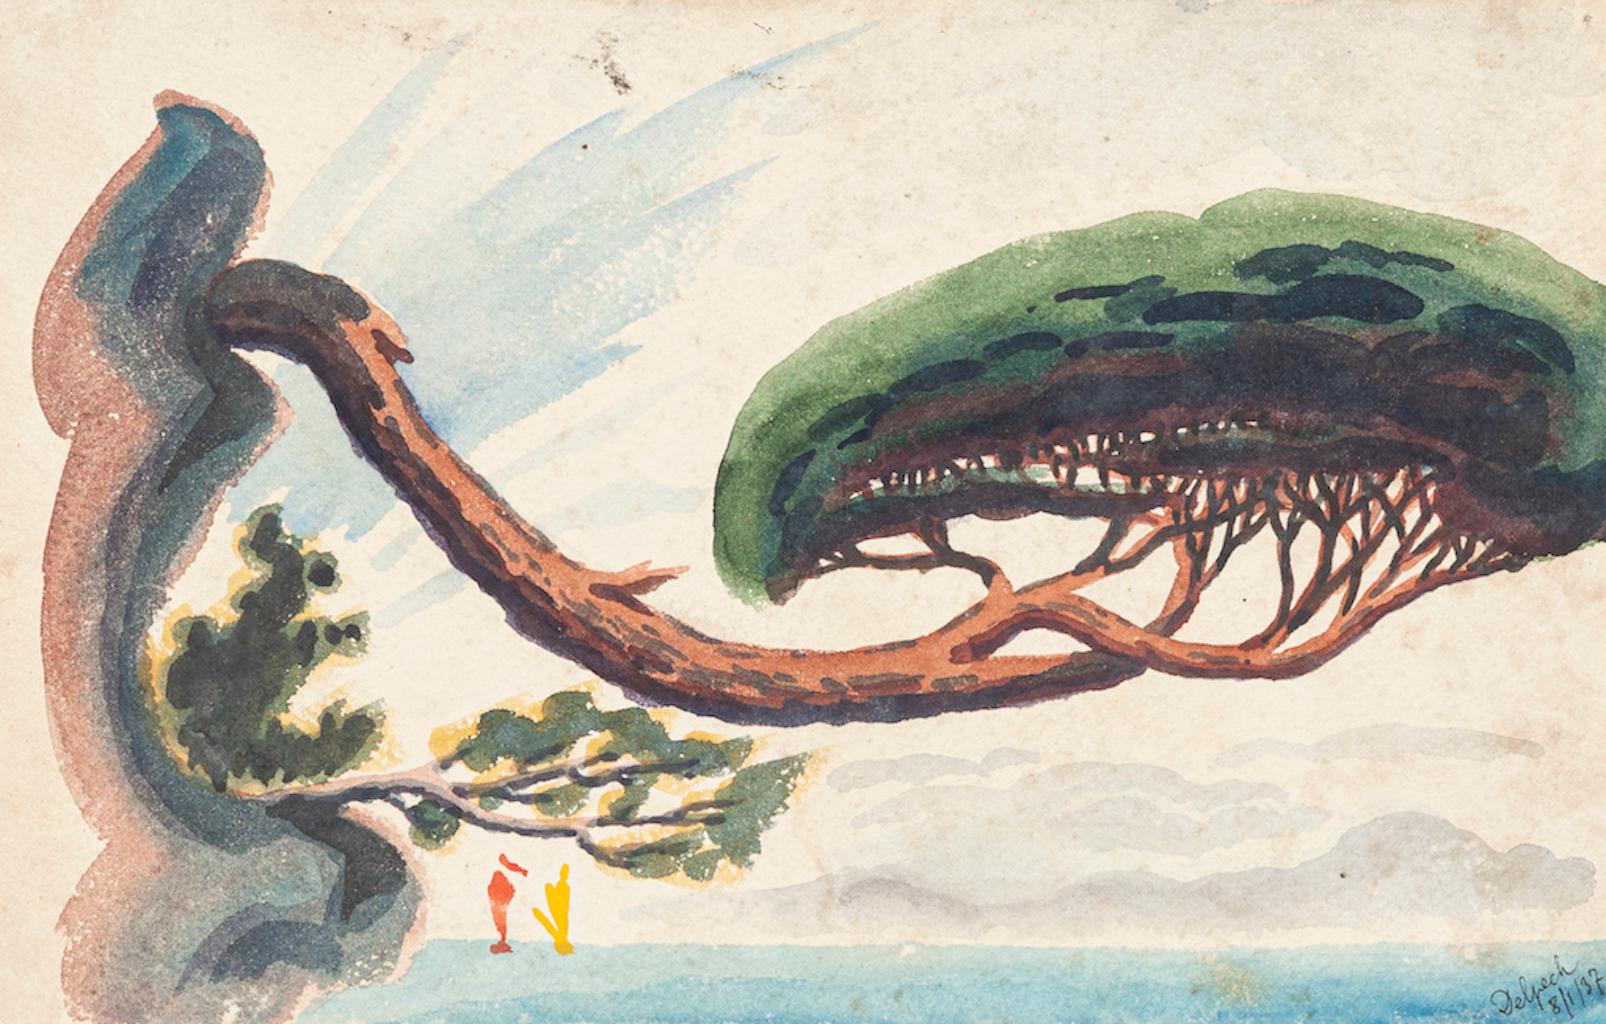 Jean Delpech Landscape Art - Lonely Tree, Cote d'Azur - Watercolor on Paper by J.-R. Delpech - 1937